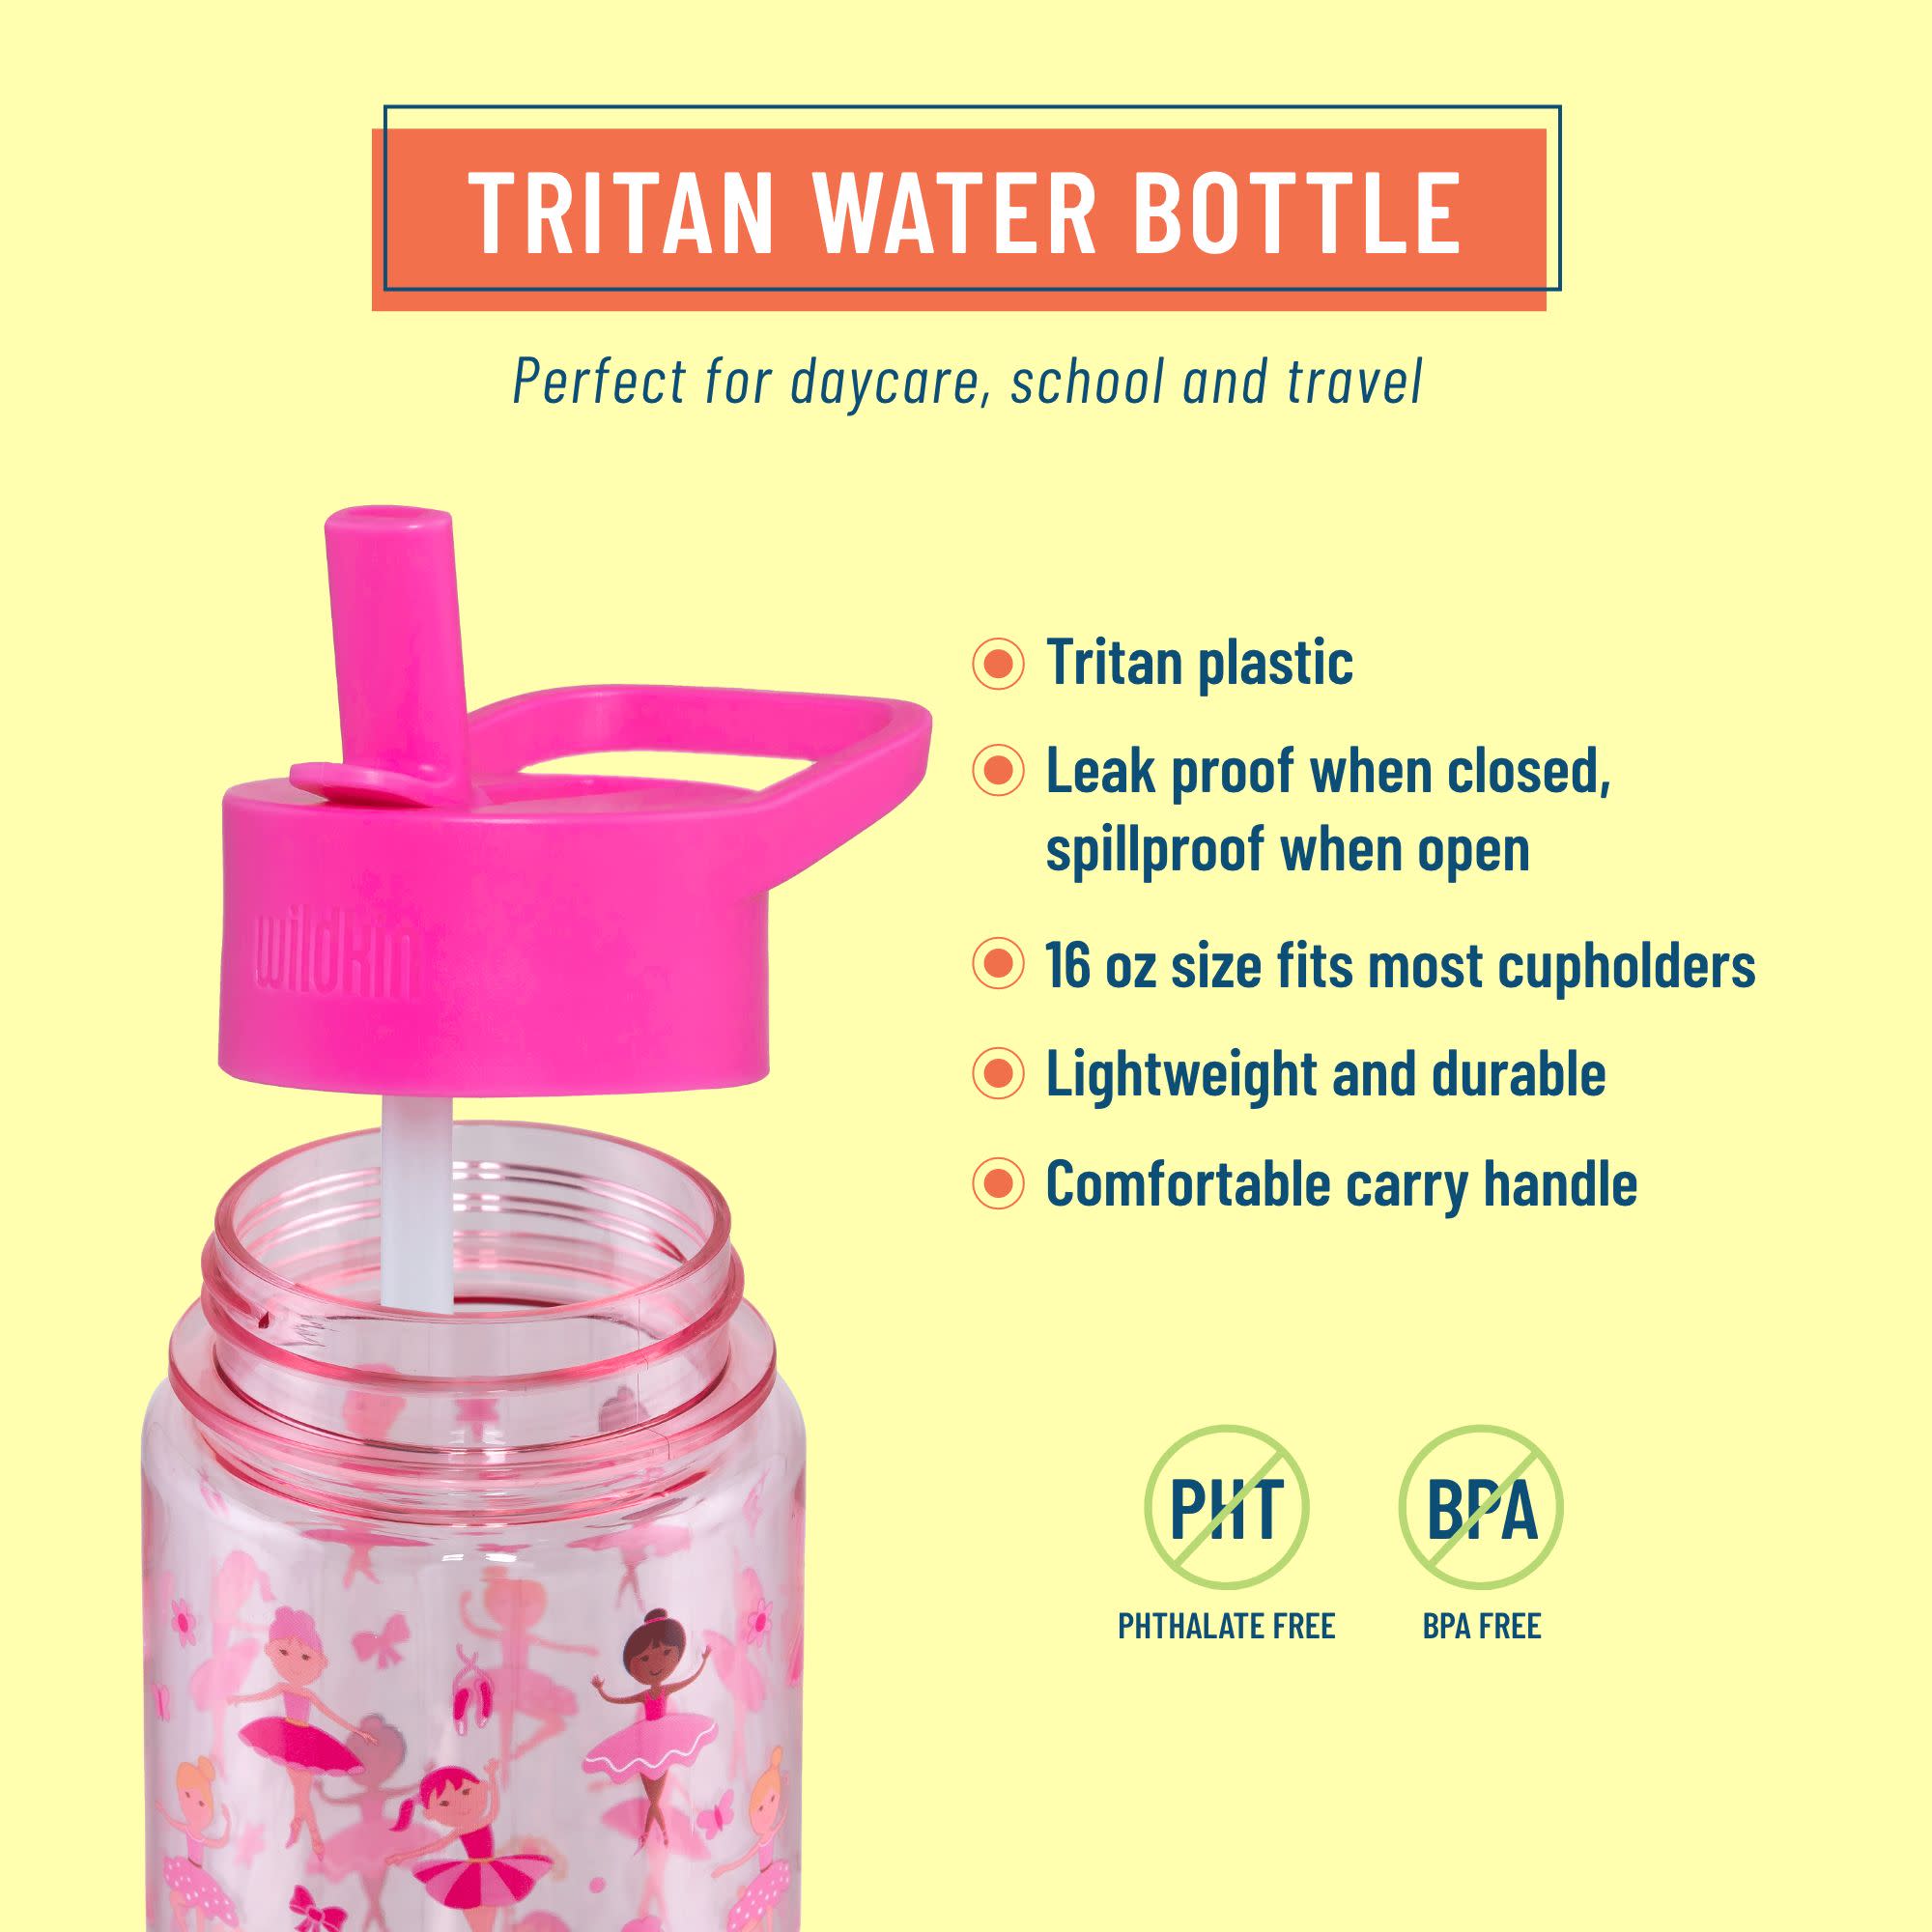 Wildkin Kids 16 oz Tritan Plastic Water Bottle for Boys & Girls (Ballerina)